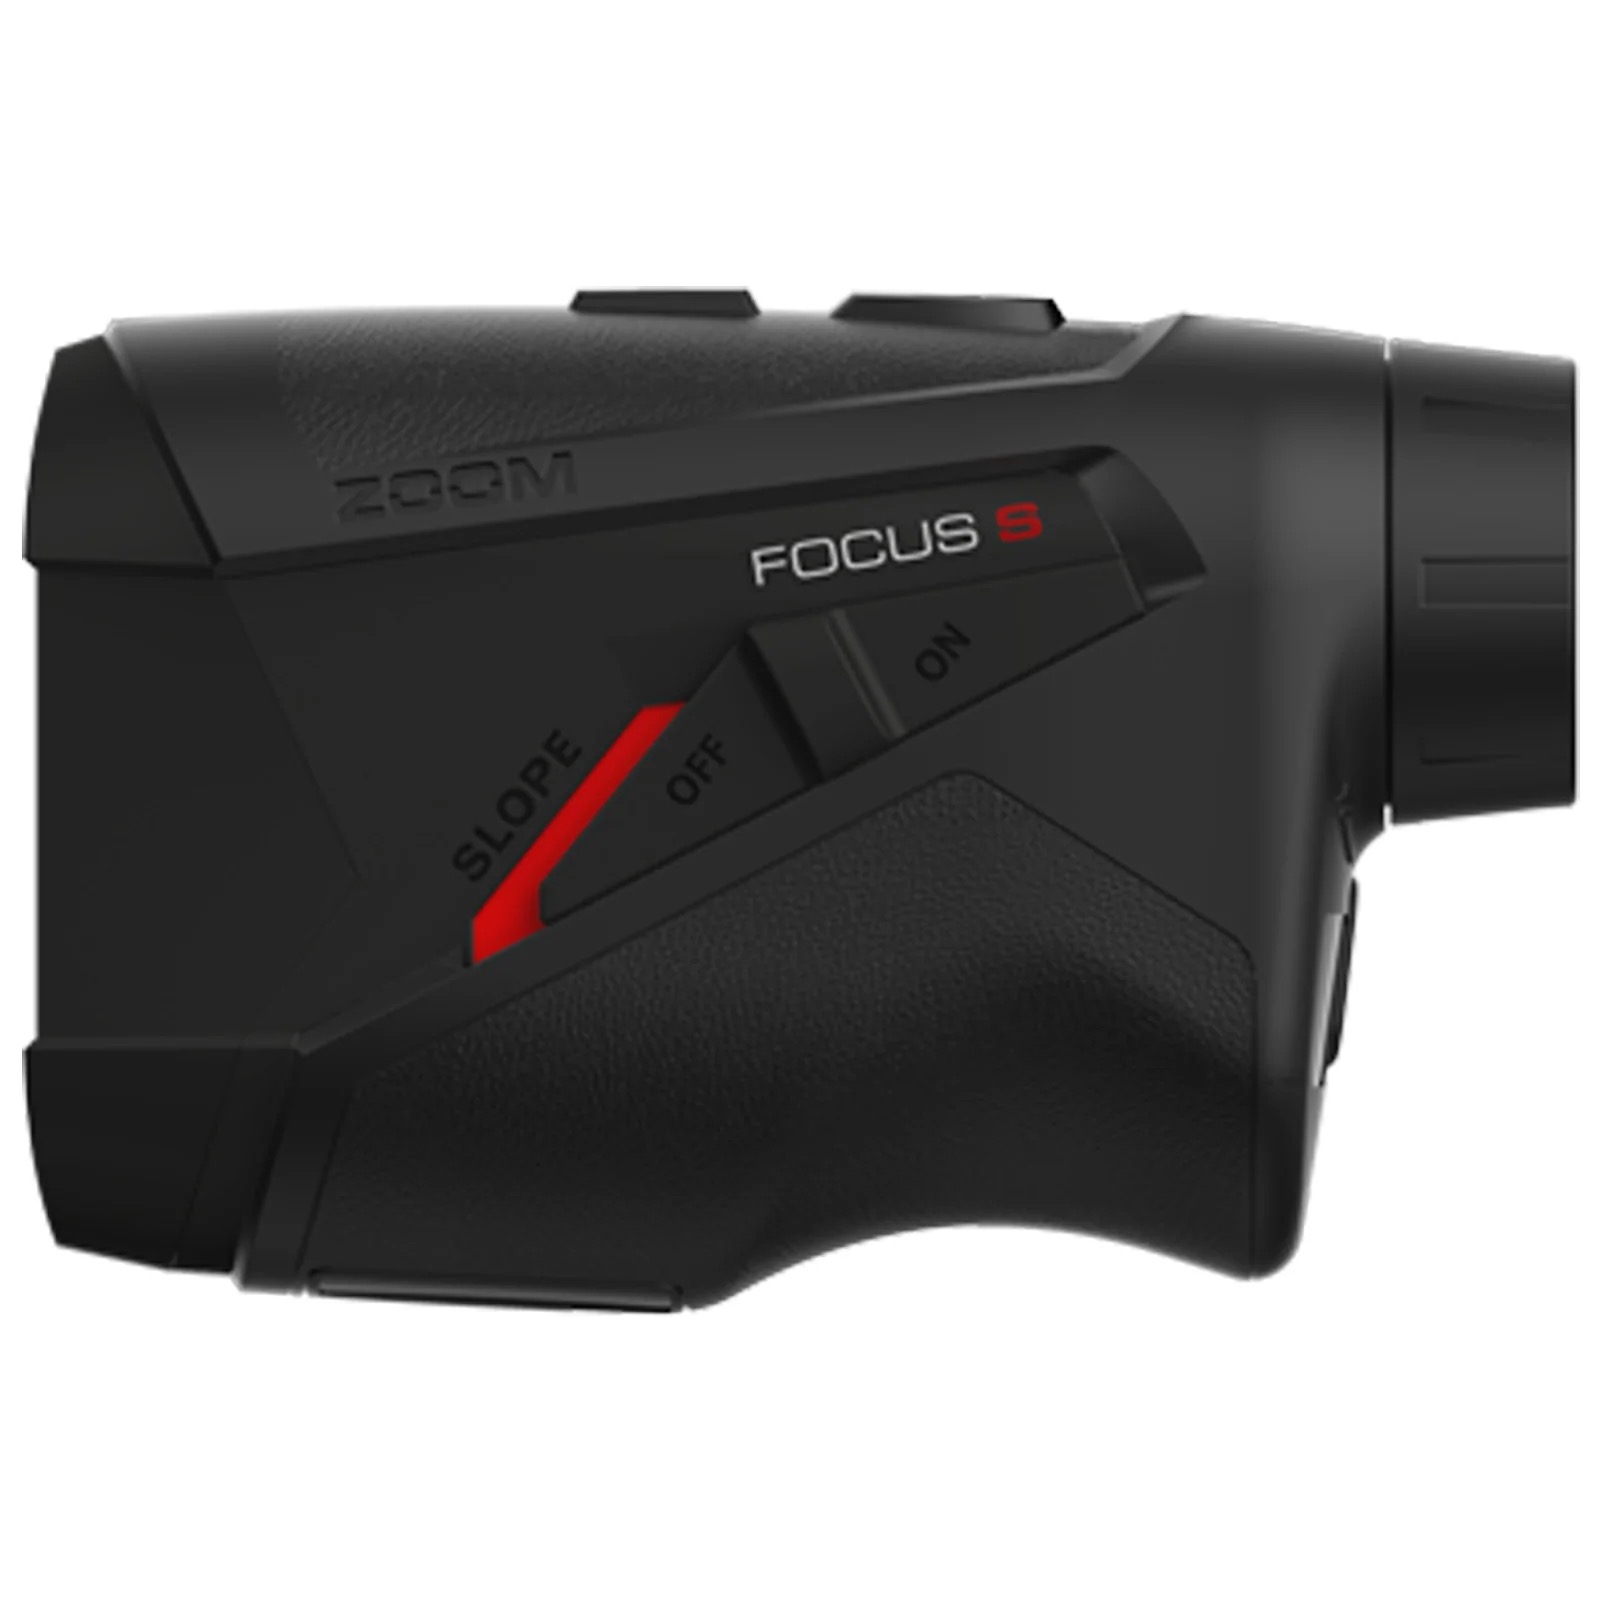 Zoom Rangefinder Focus S Black